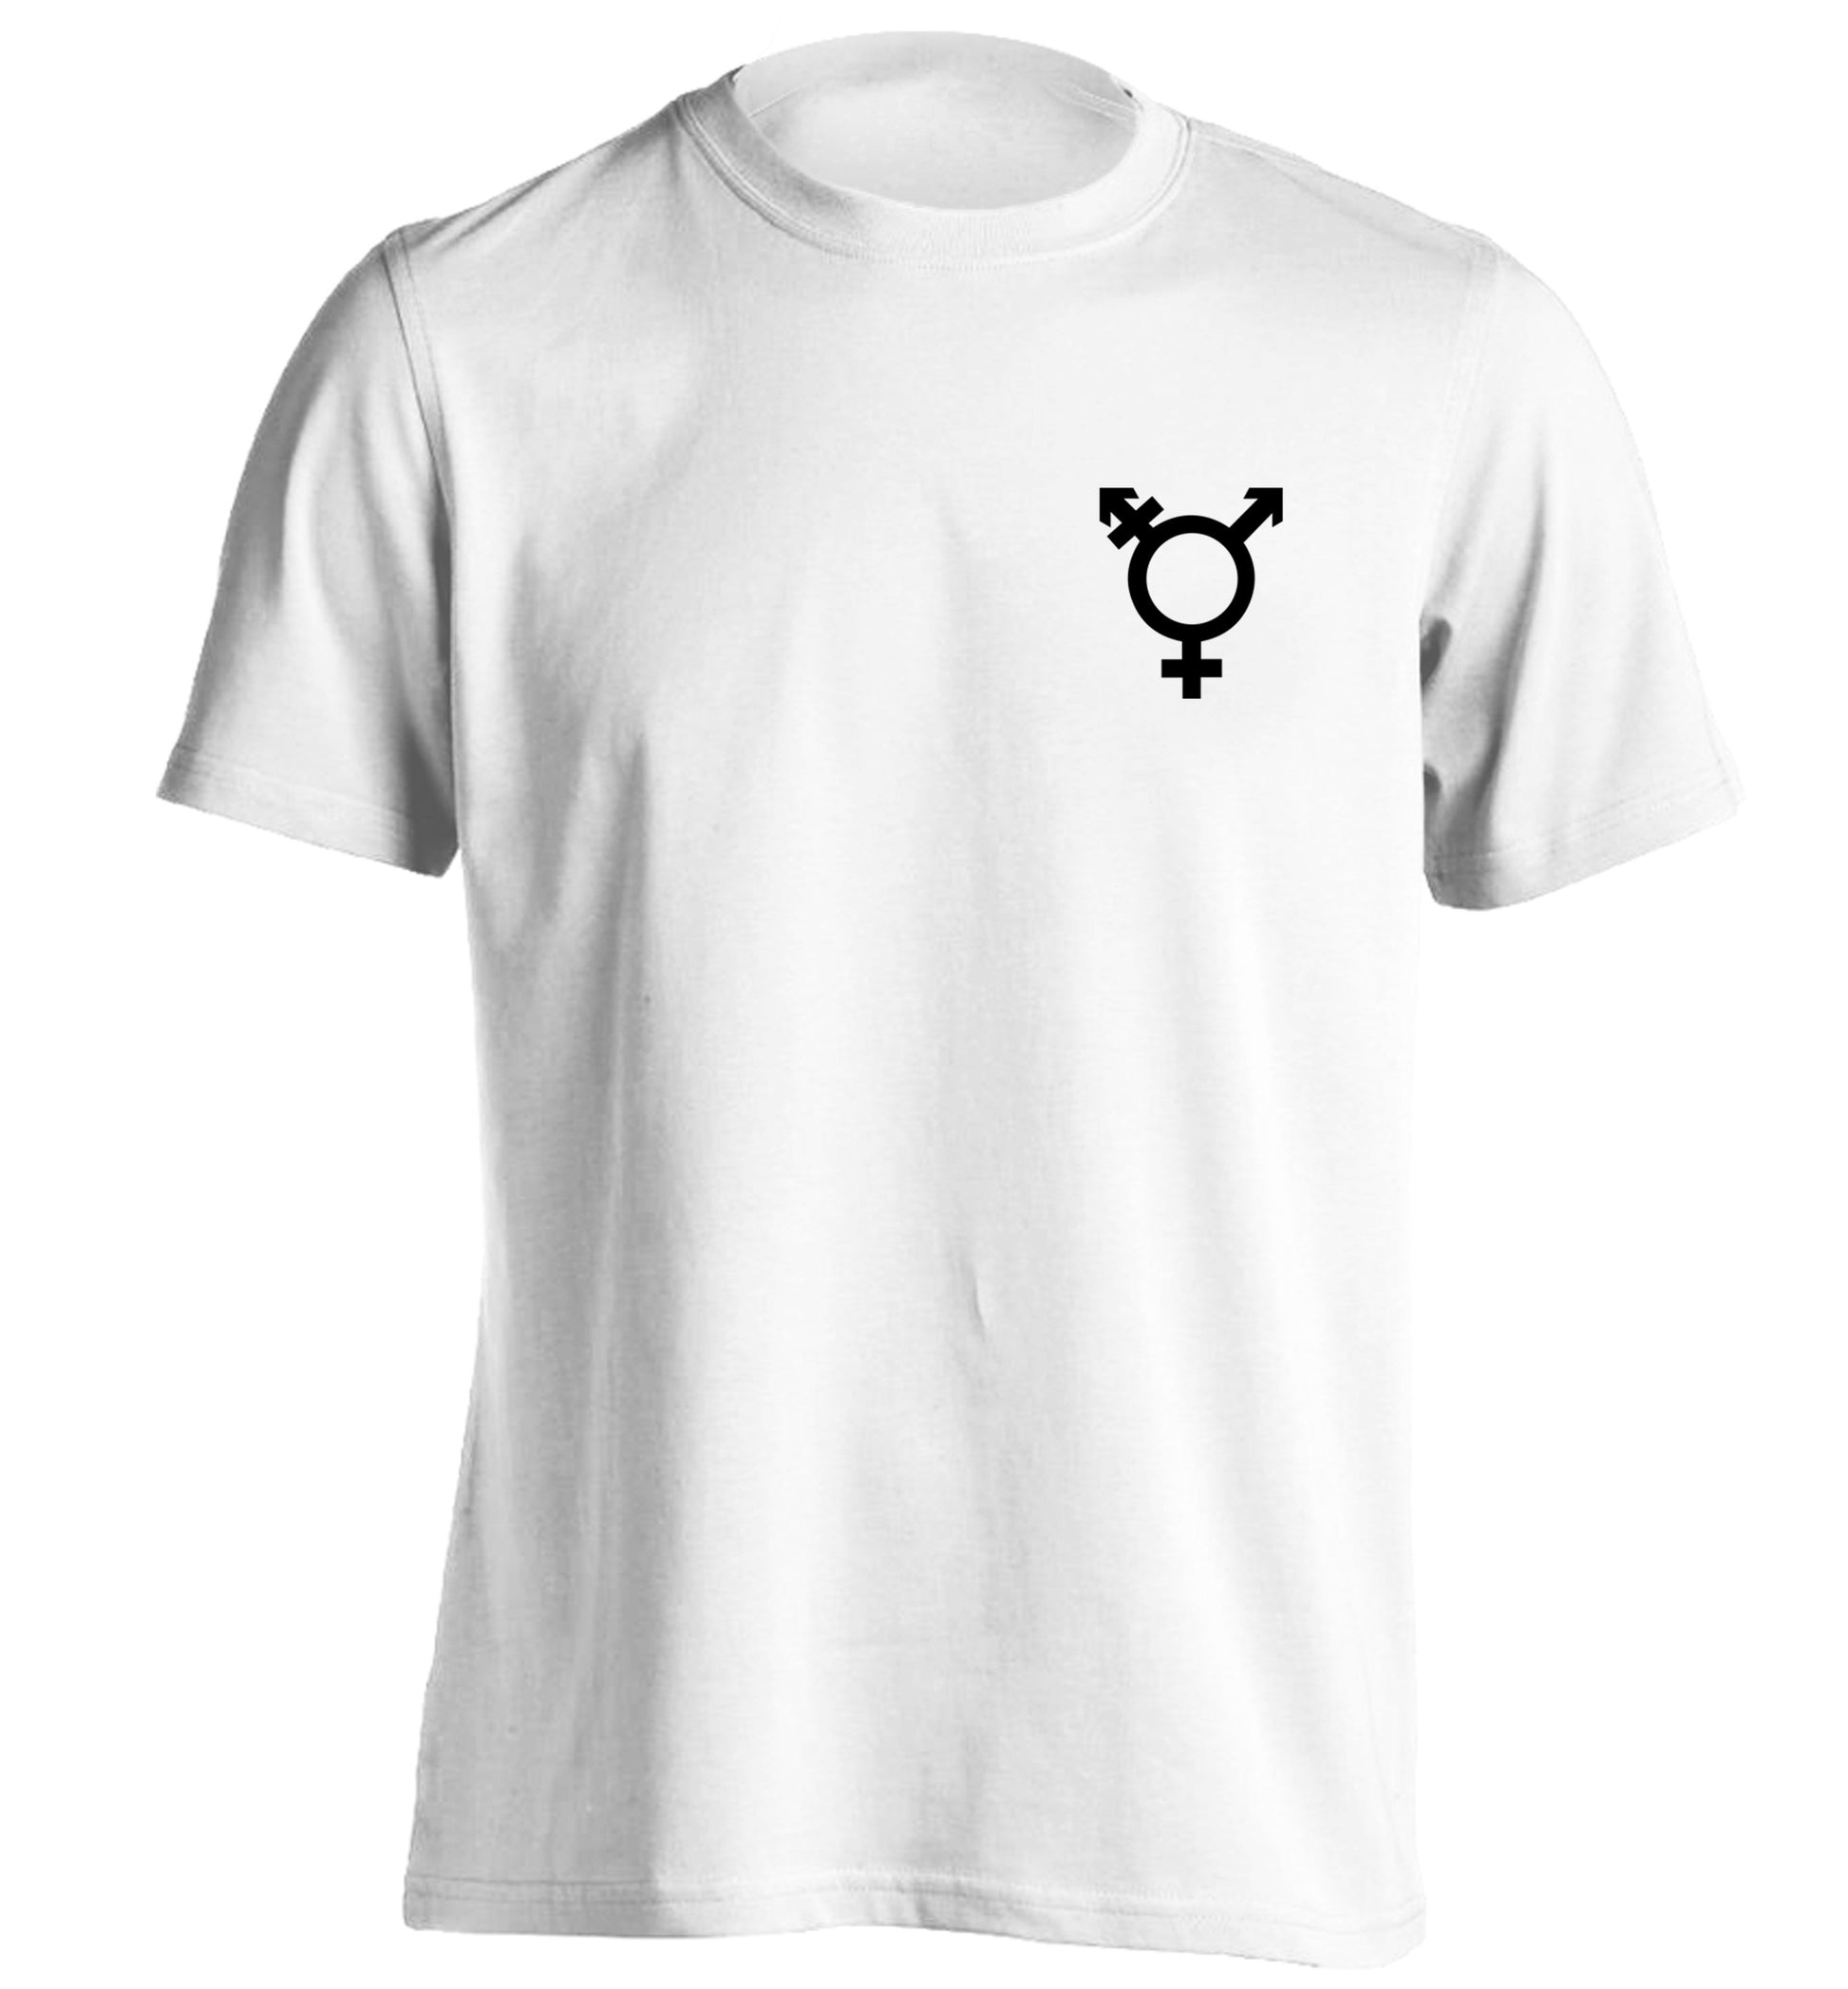 Trans gender symbol pocket adults unisex white Tshirt 2XL